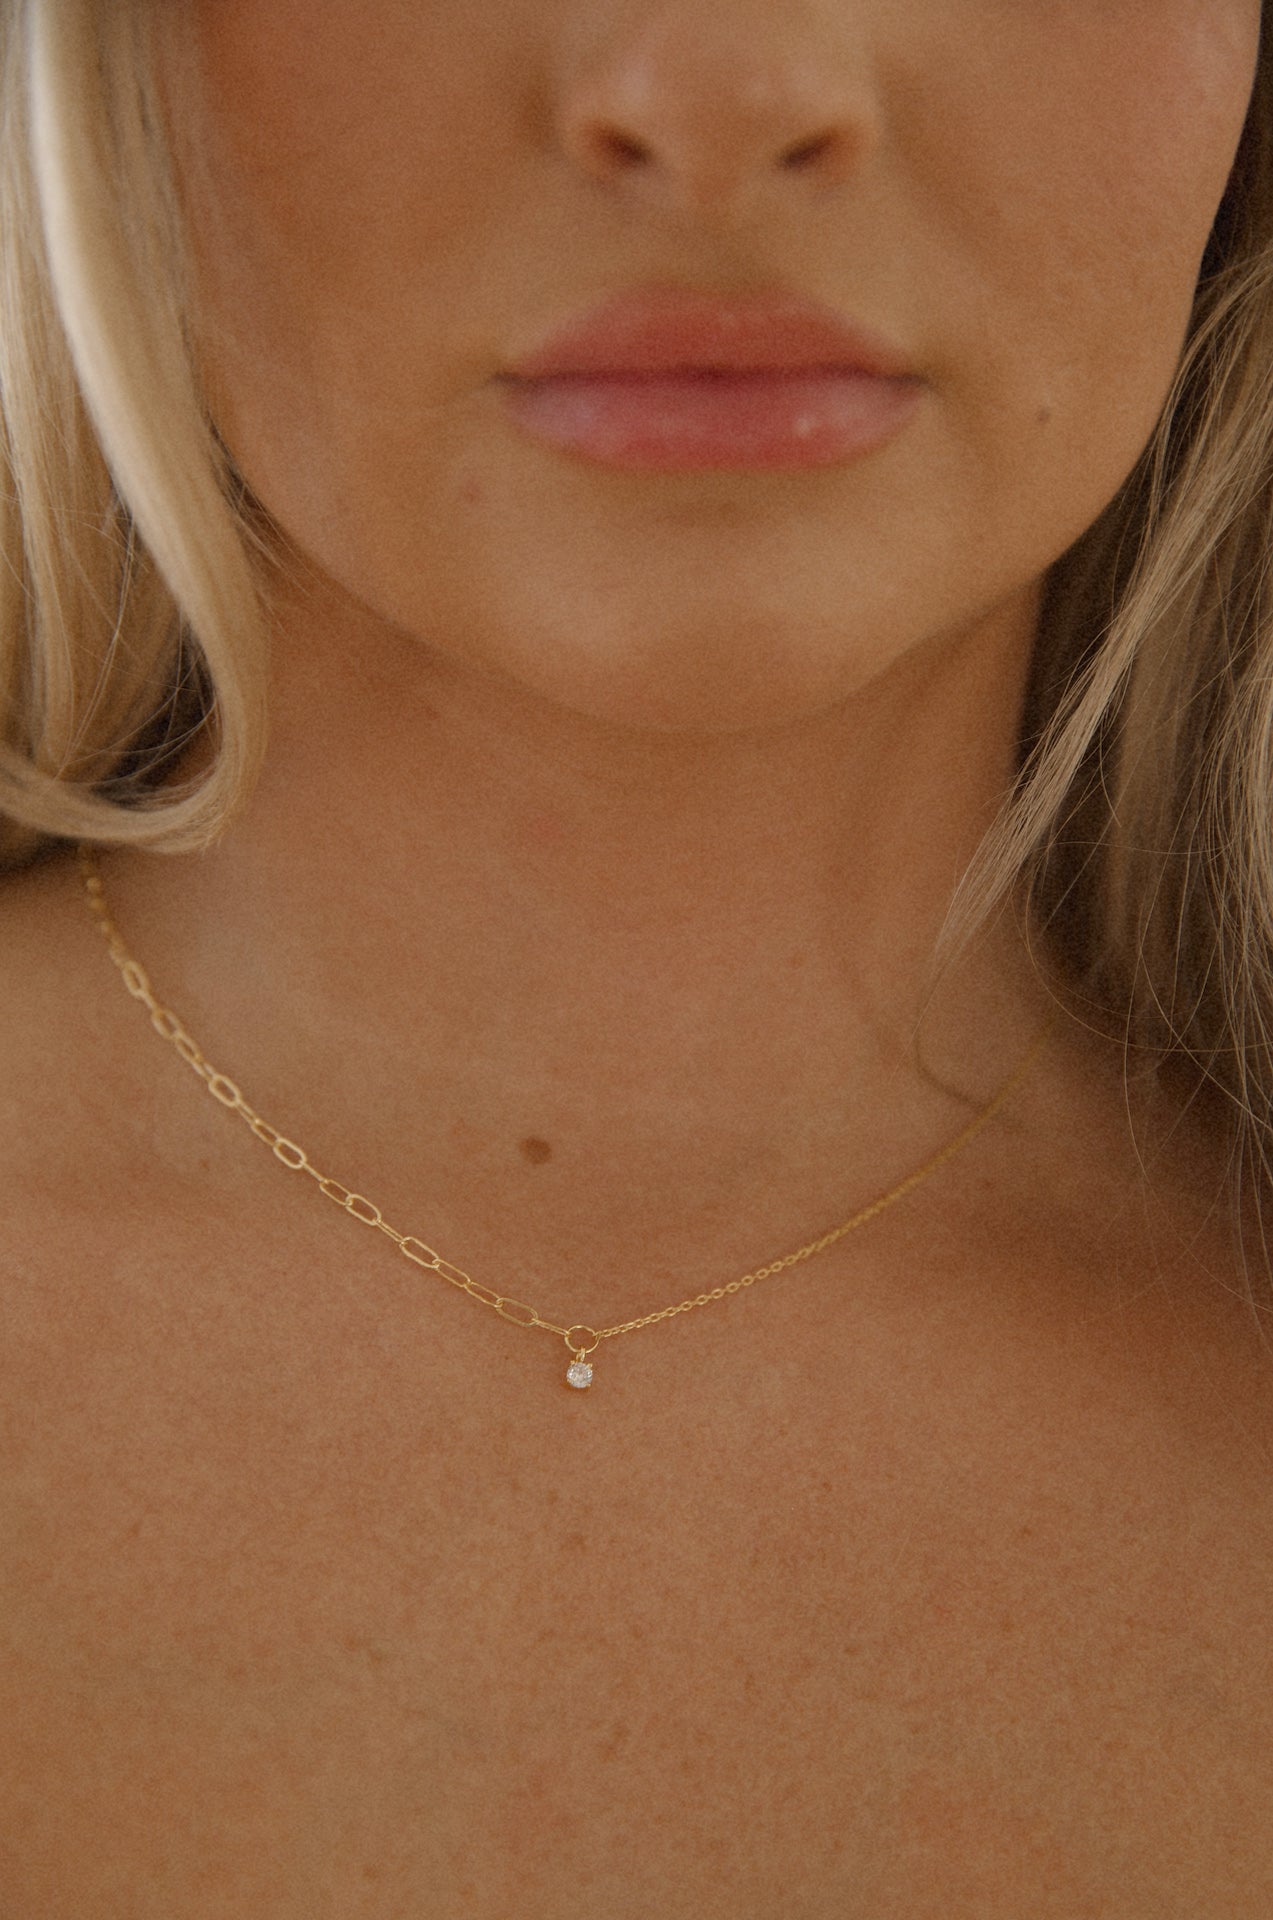 18k gold dainty charm necklace